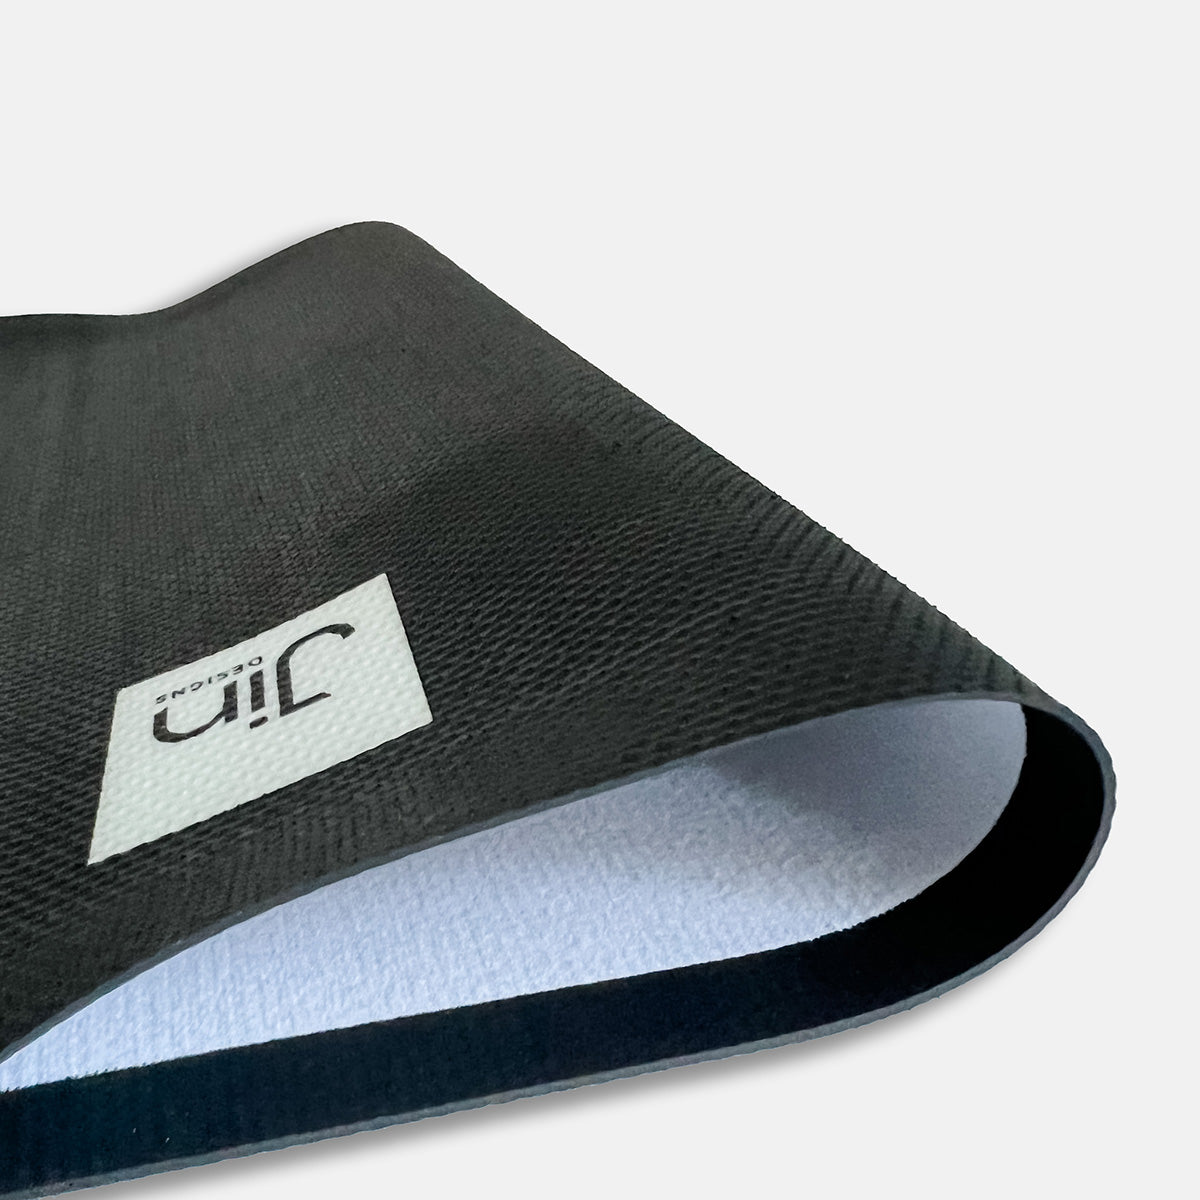 Anti-slip rubber backing on desk mat and Jin Designs logo on reverse